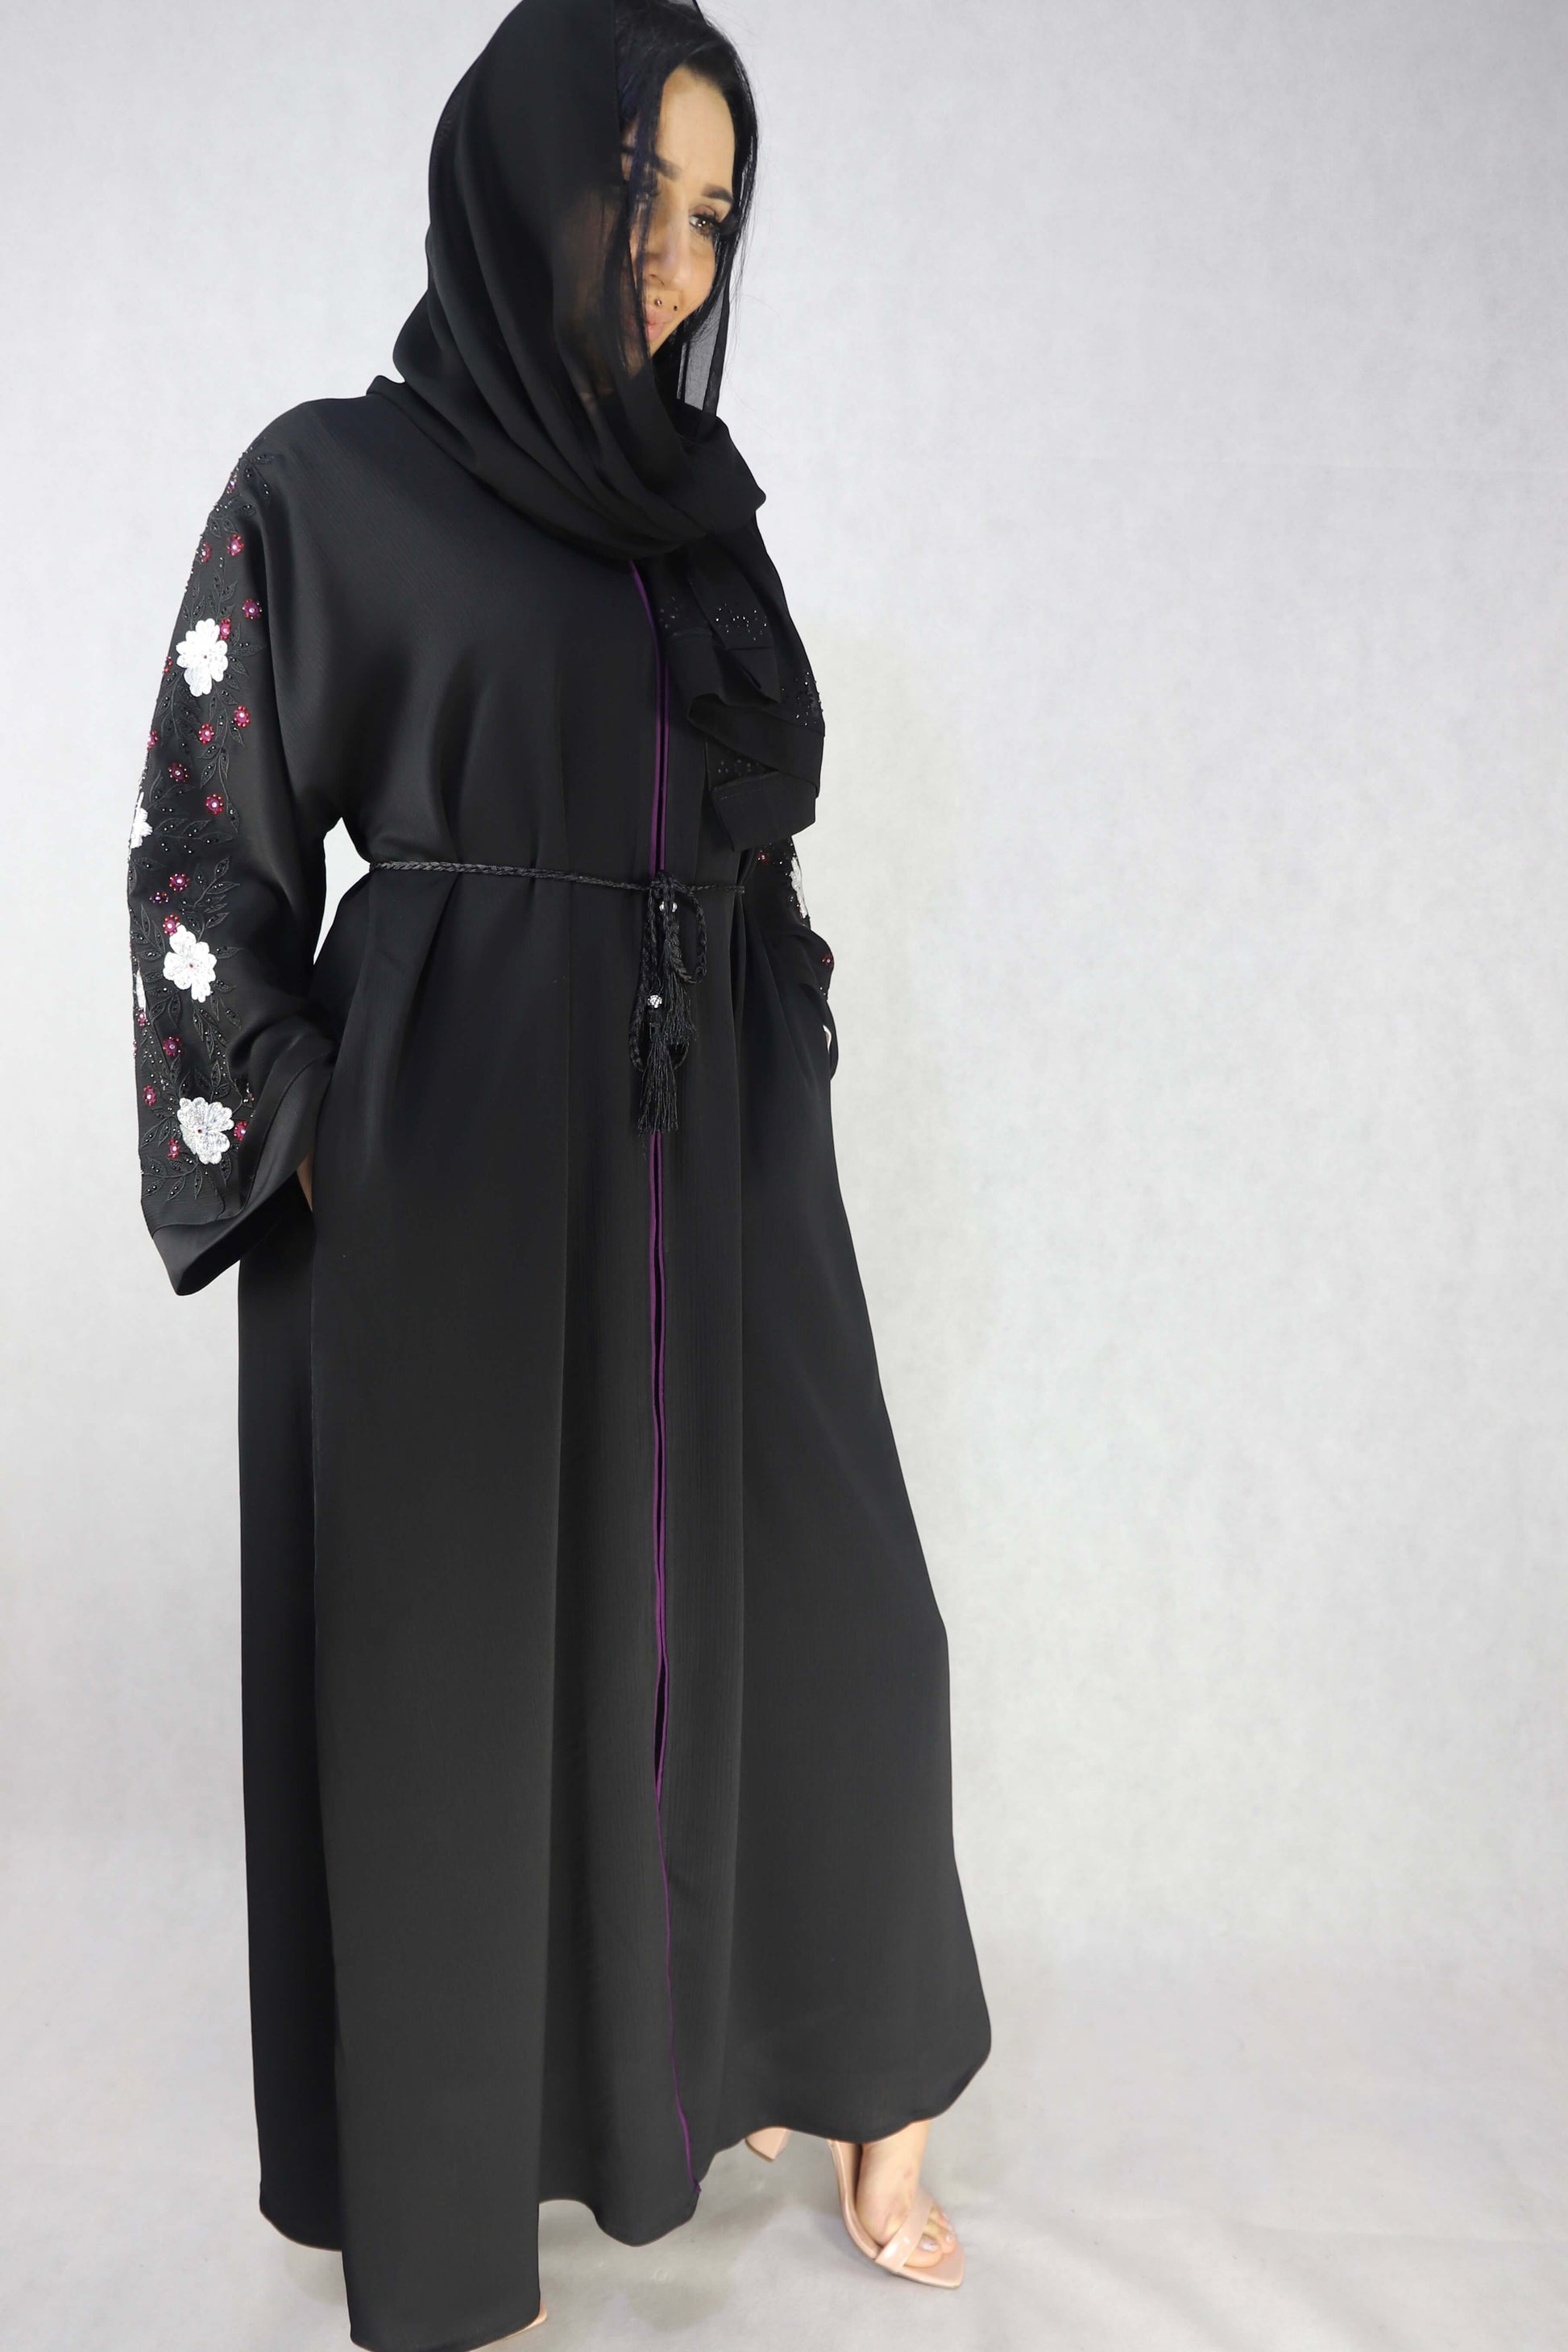 Embroidery Abaya And Stonework, Black Open Abaya.